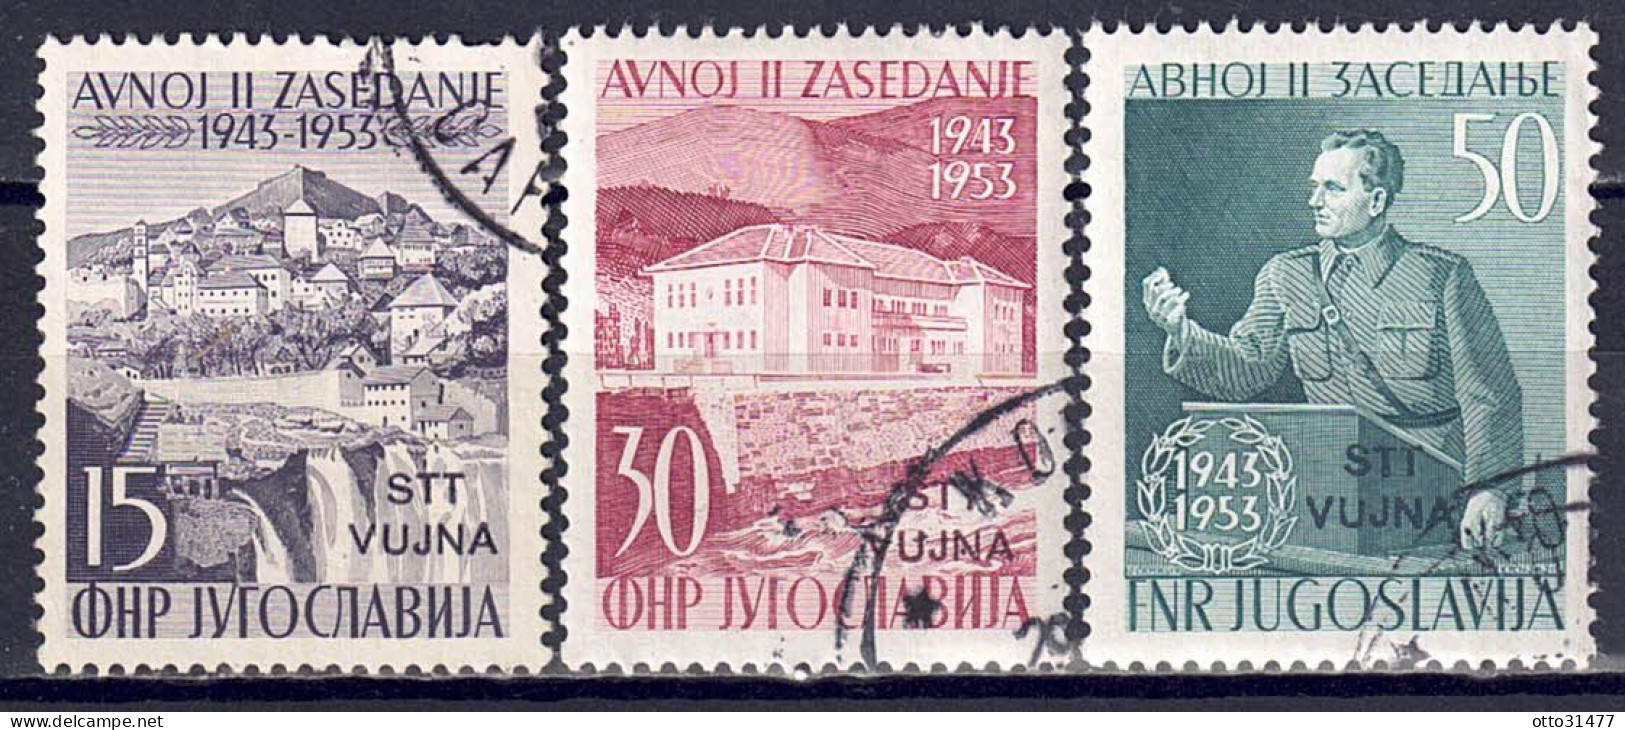 Italien / Triest Zone B - 1953 - AVNOJ, Nr. 107 - 109, Gestempelt / Used - Gebraucht